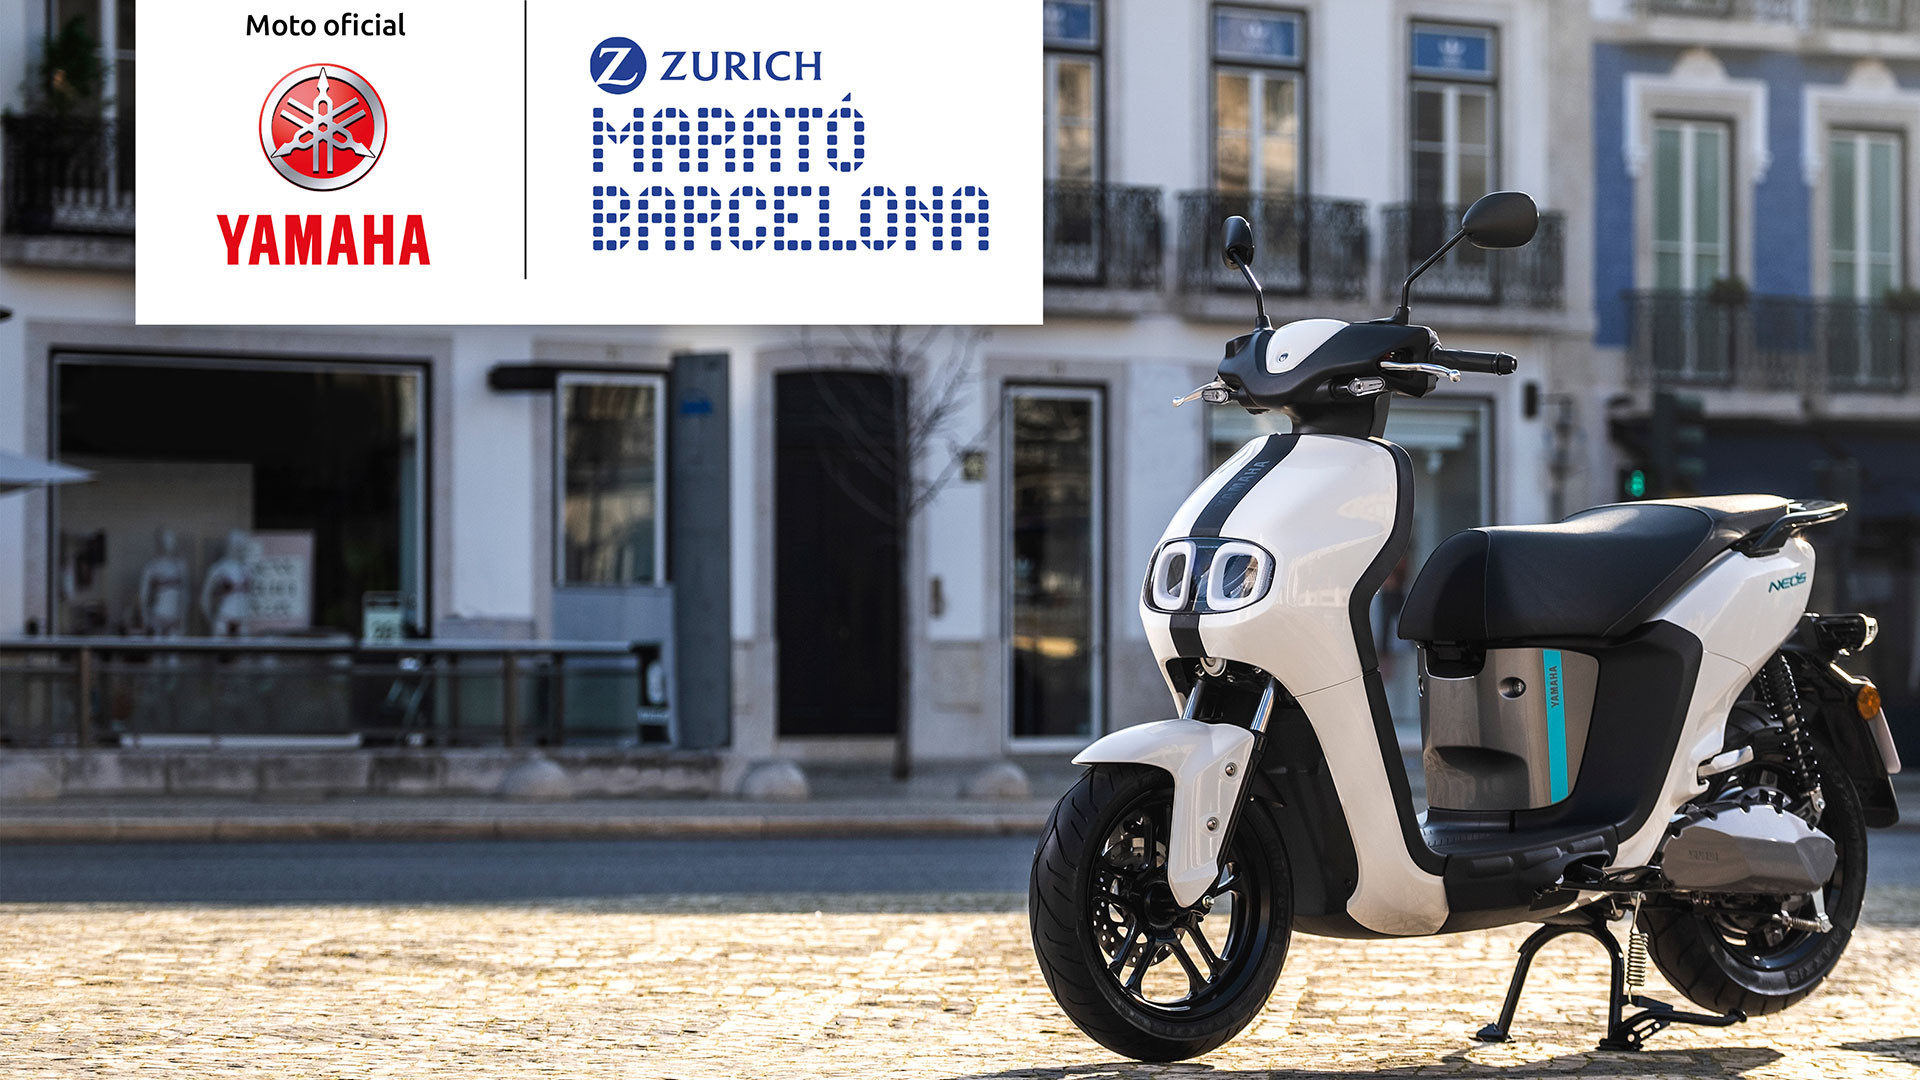 La Yamaha NEO’s 2022 es nombrada moto oficial del Zurich Marató Barcelona